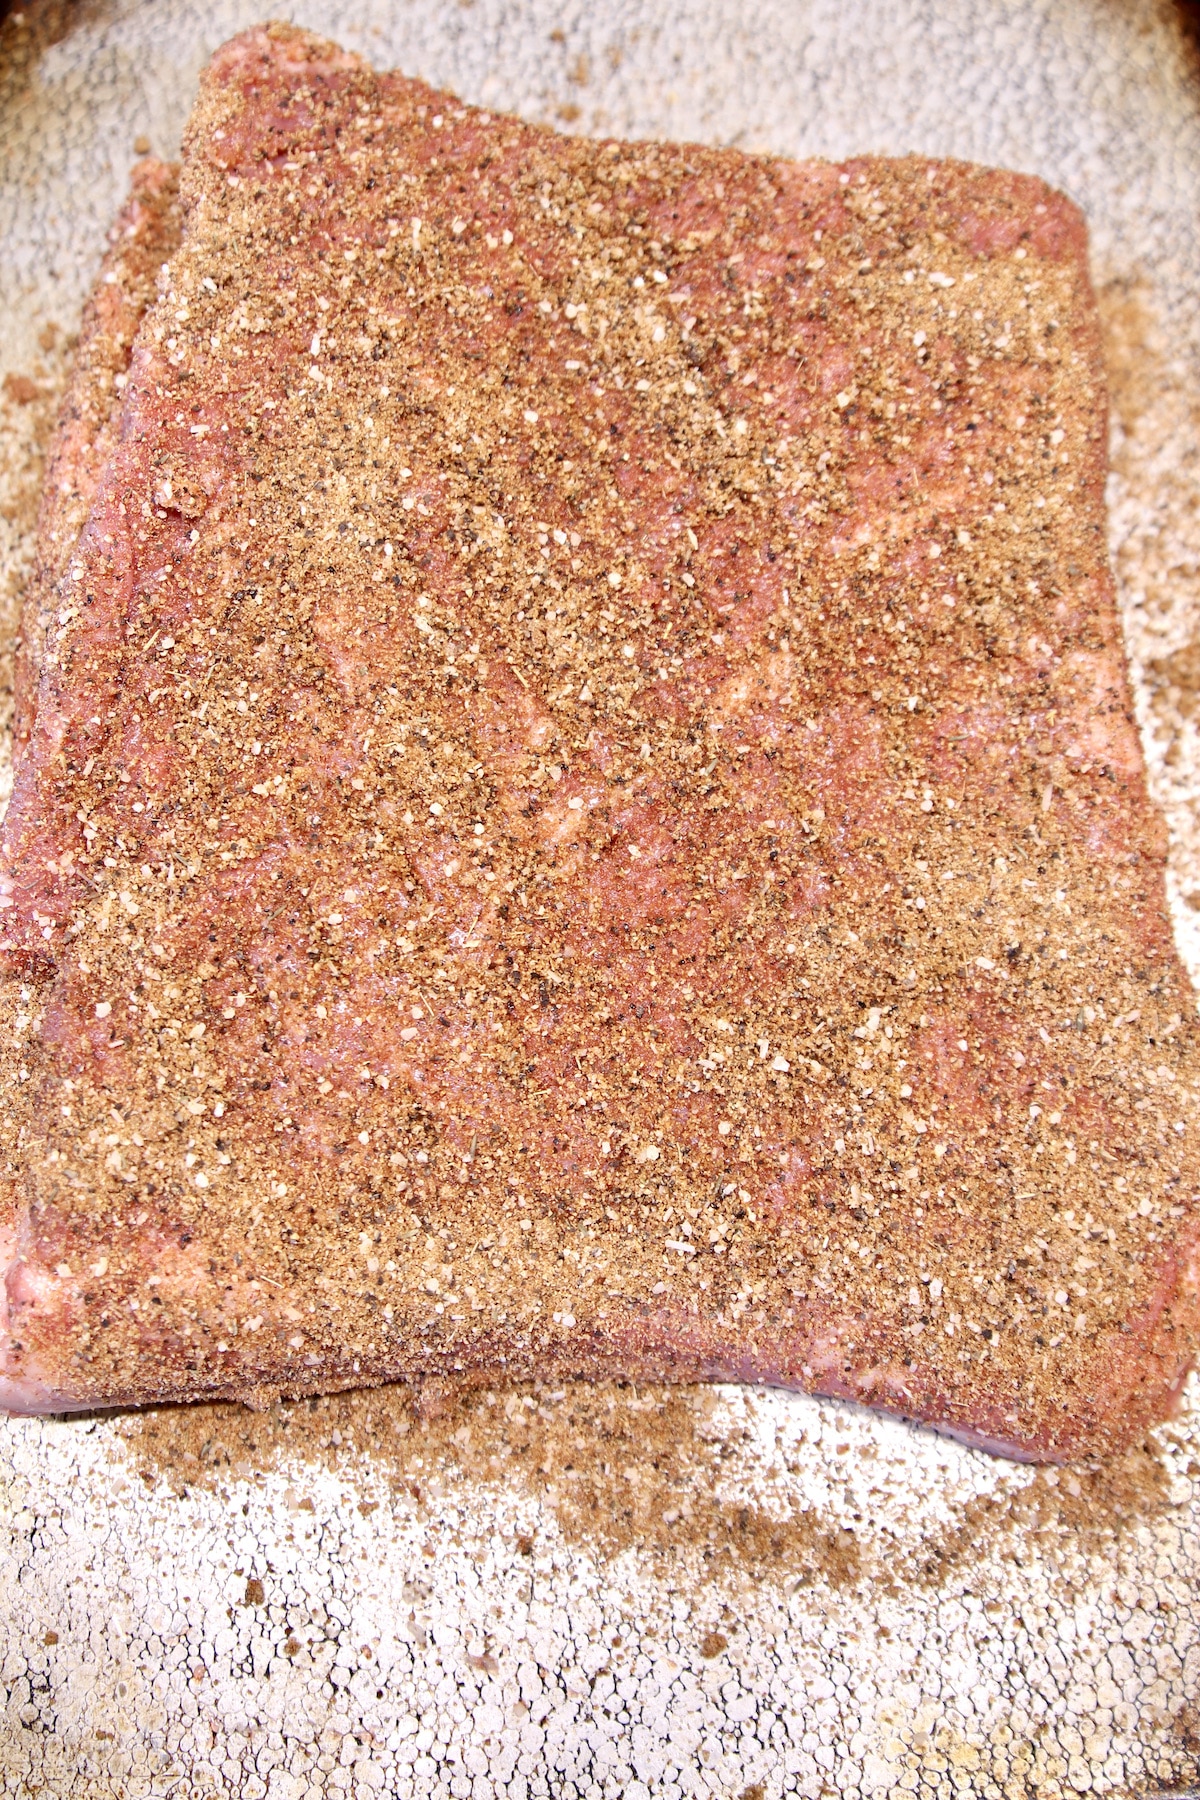 Brisket flat sprinkled with dry rub.